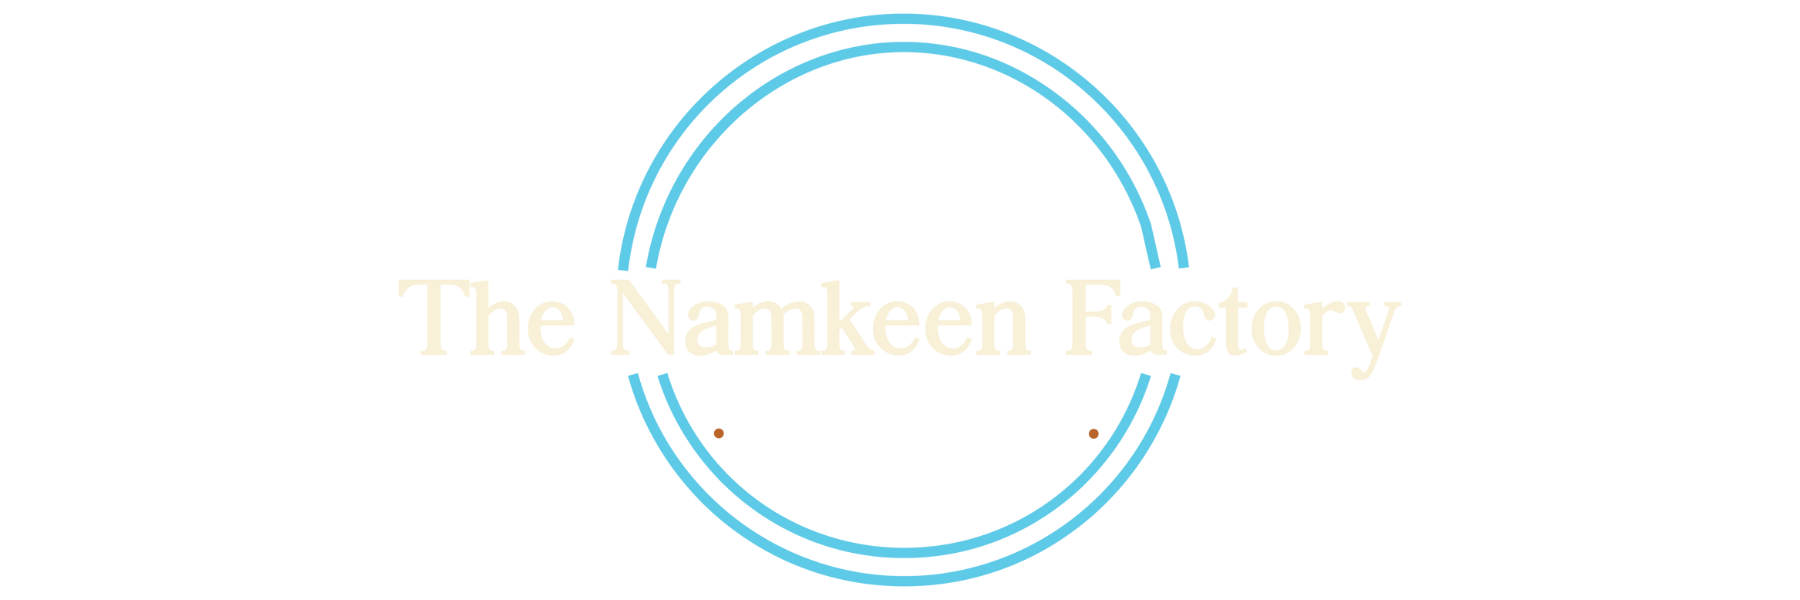 The Namkeen Factory